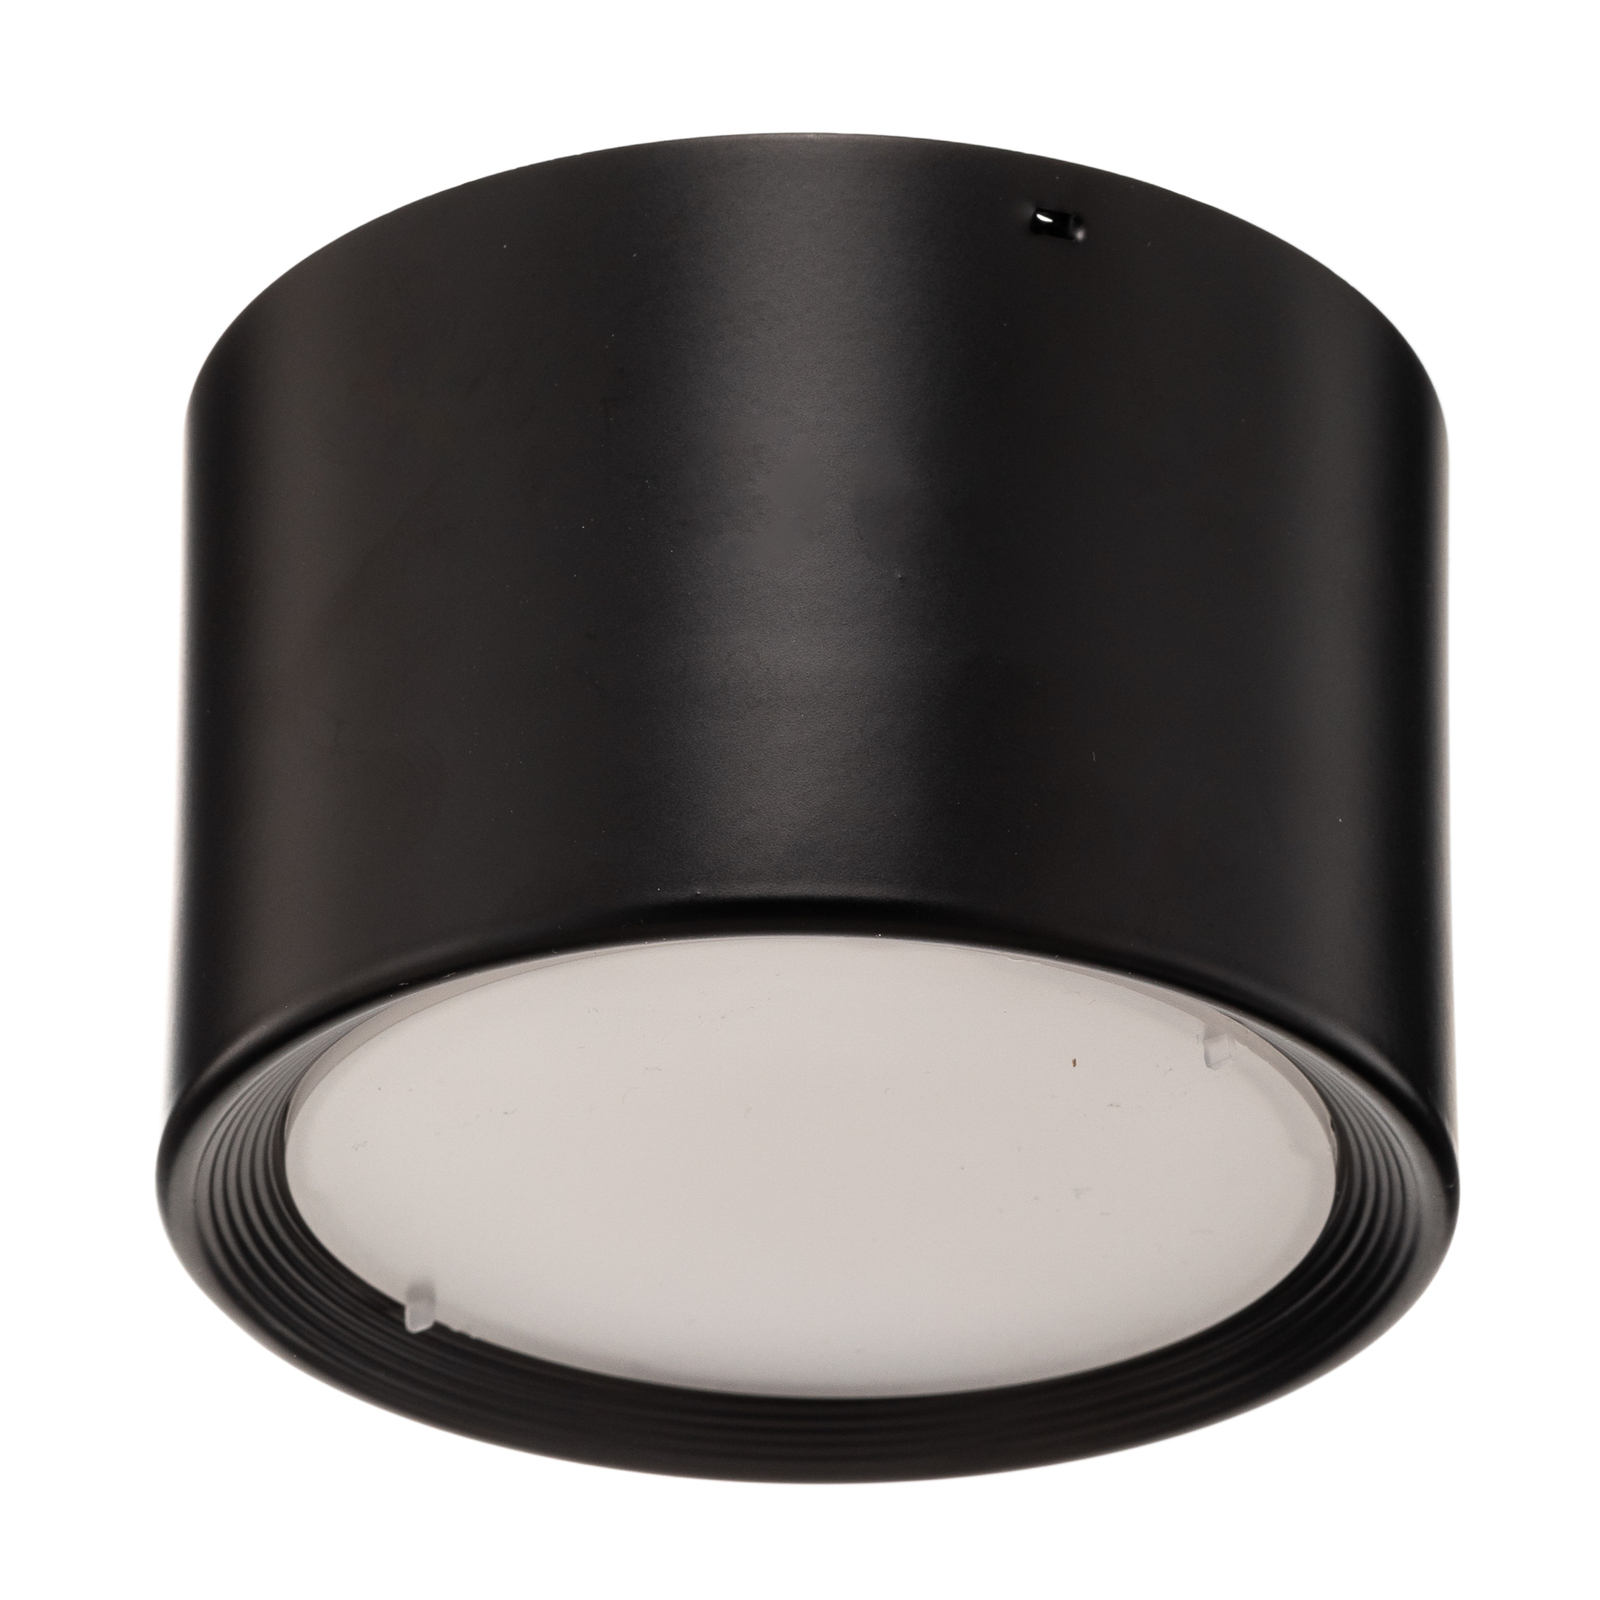 Ita LED downlight in zwart met diffuser, Ø 10 cm